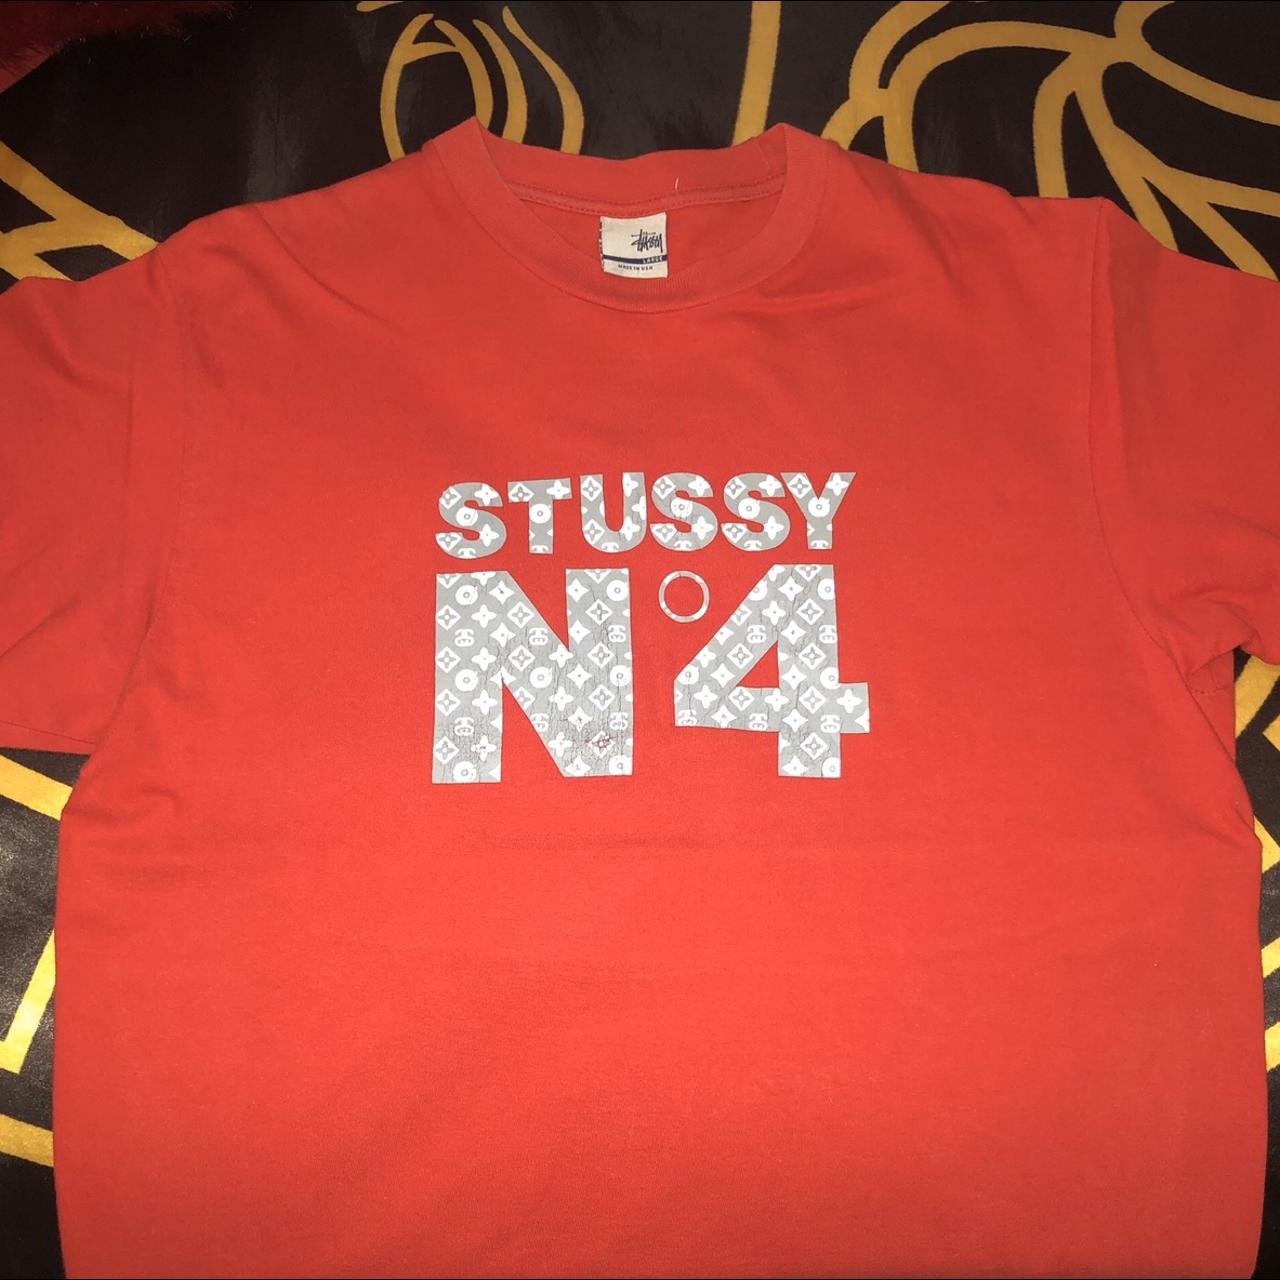 We Vintage - STUSSY X LOUIS VUITTON The matching Stussy LV shirt